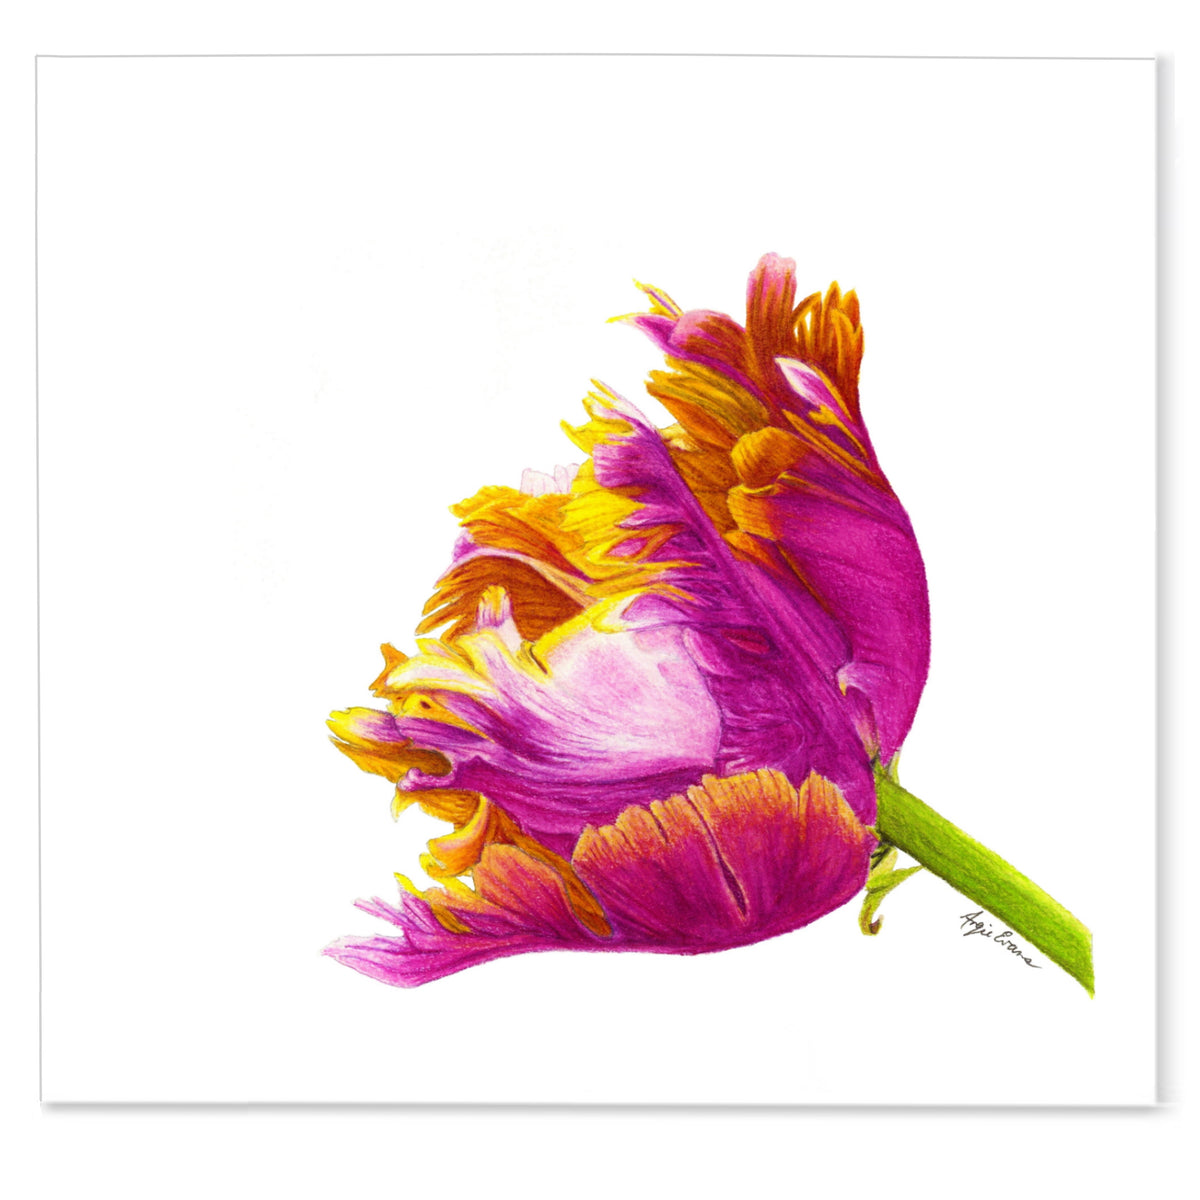 Tulip Flower l Print l Brush Point Studio, pink tulip in full bloom